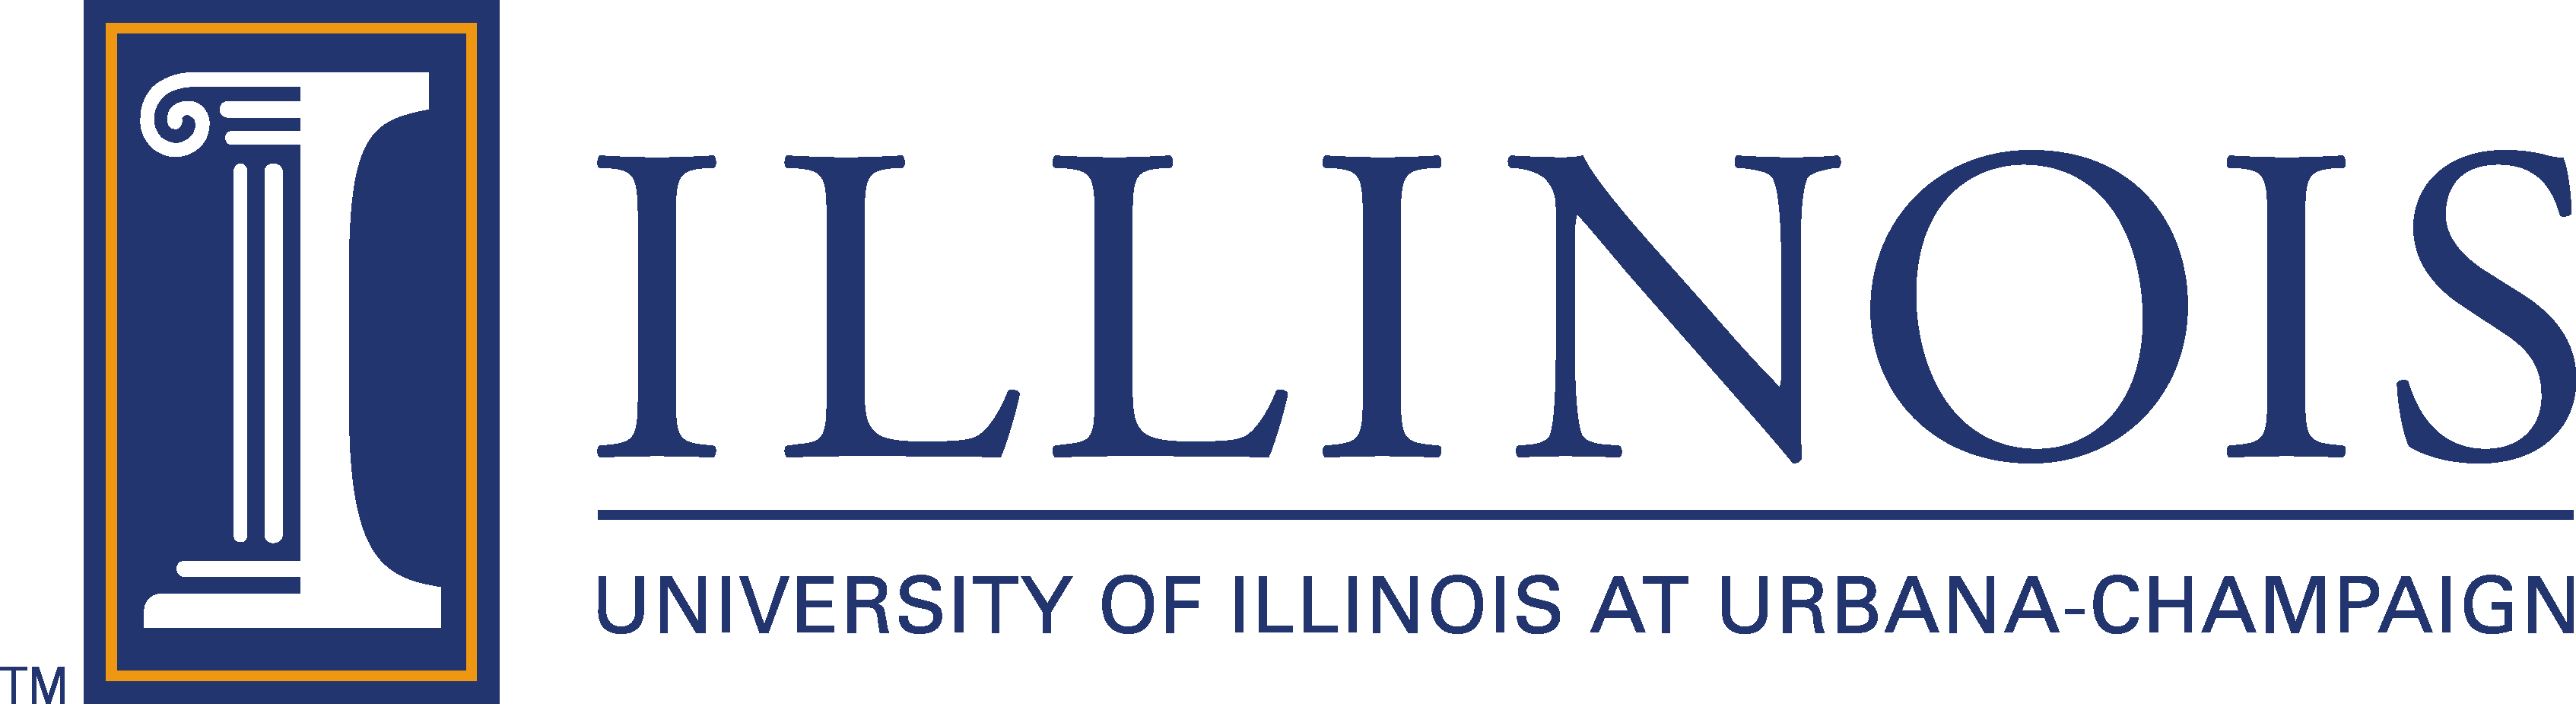 Champaign Logo - UIUC Logo and Seal [University of Illinois at Urbana-Champaign ...